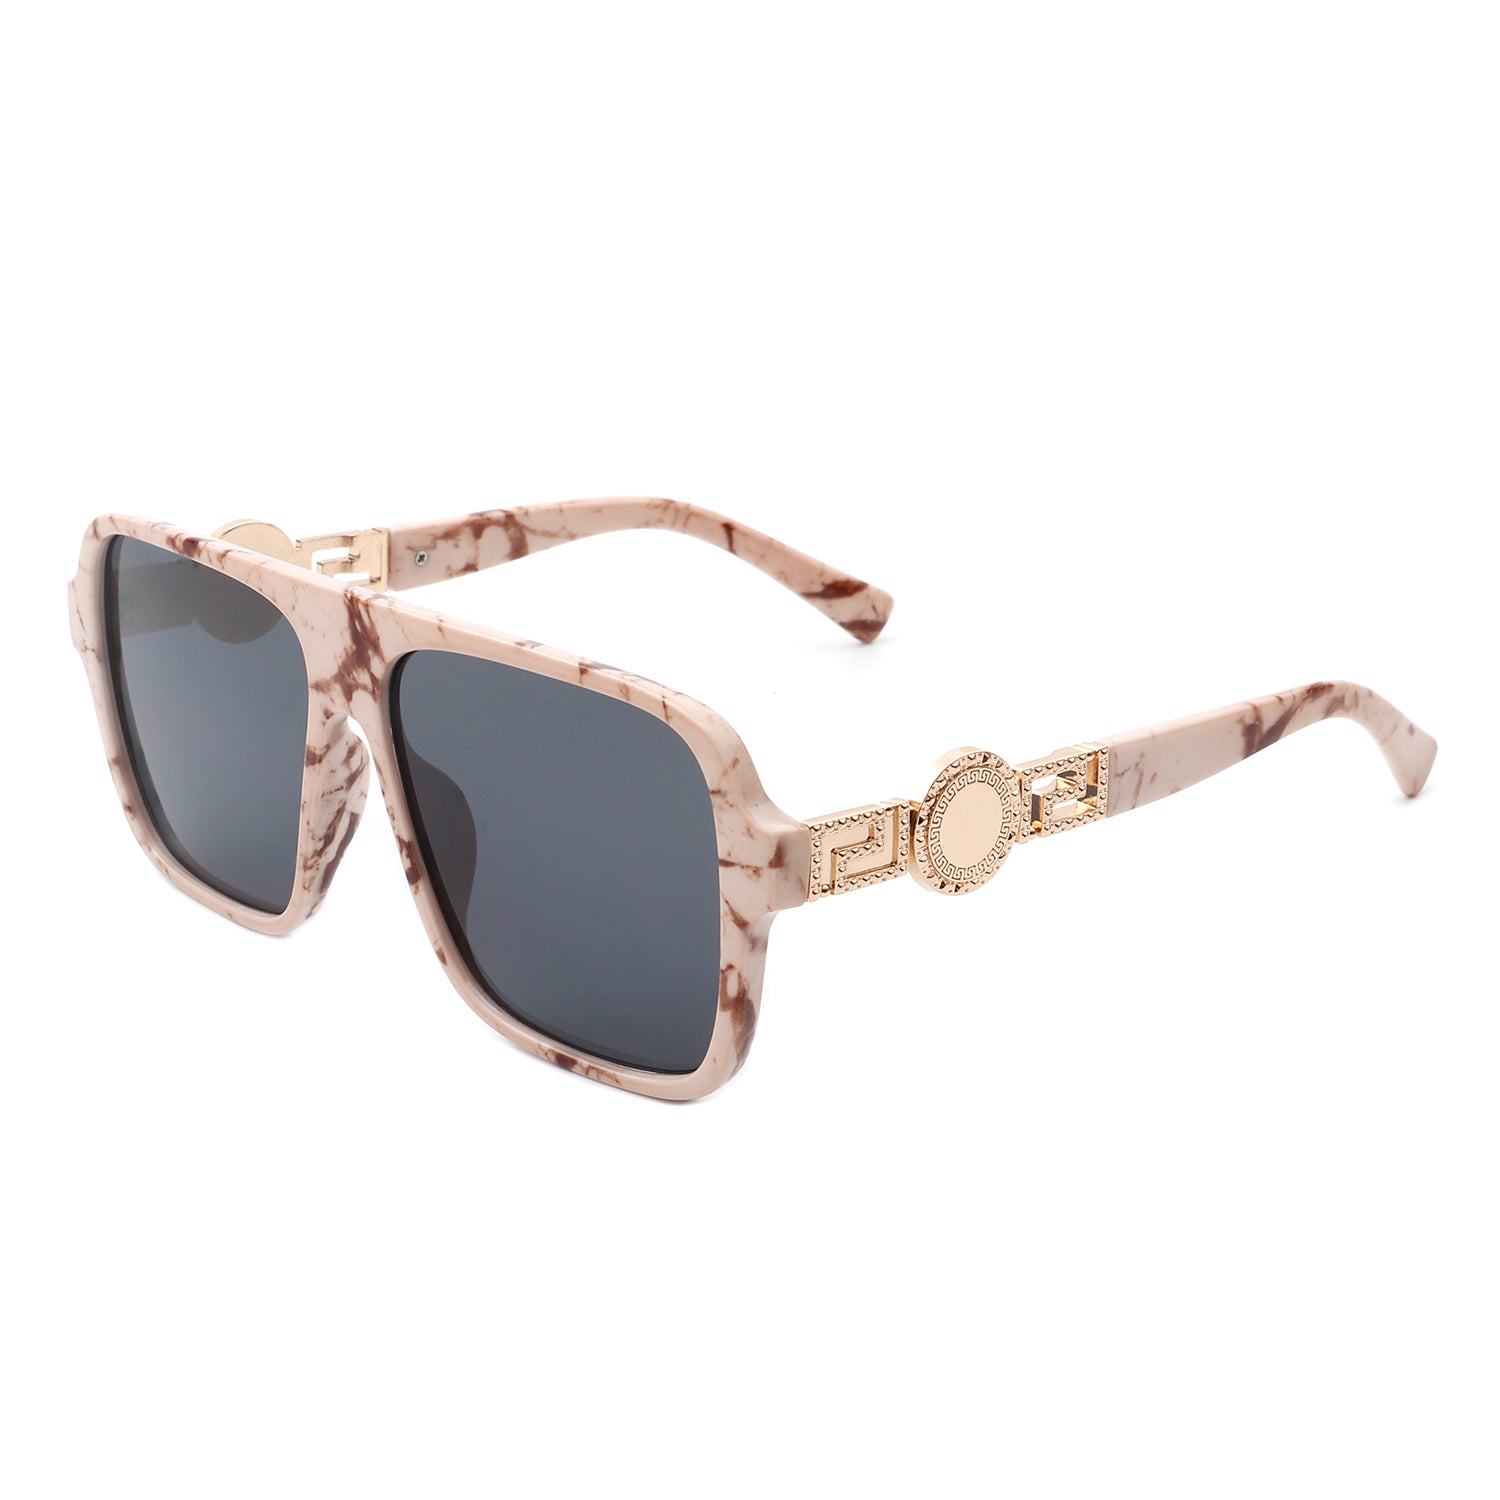 Violetra - Retro Square Aviator Style Vintage Flat Top Sunglasses Blush